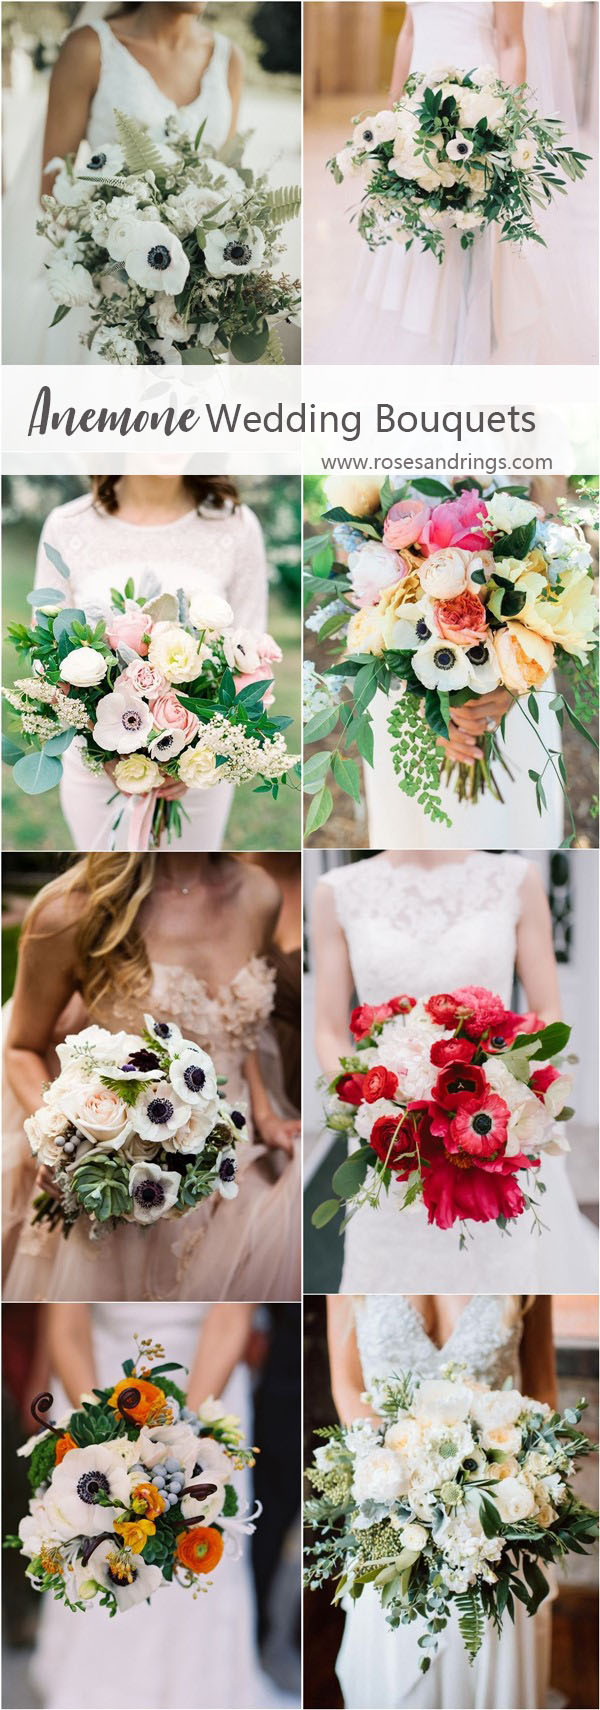 wedding flower trend ideas - white and black anemone wedding flower bouquets